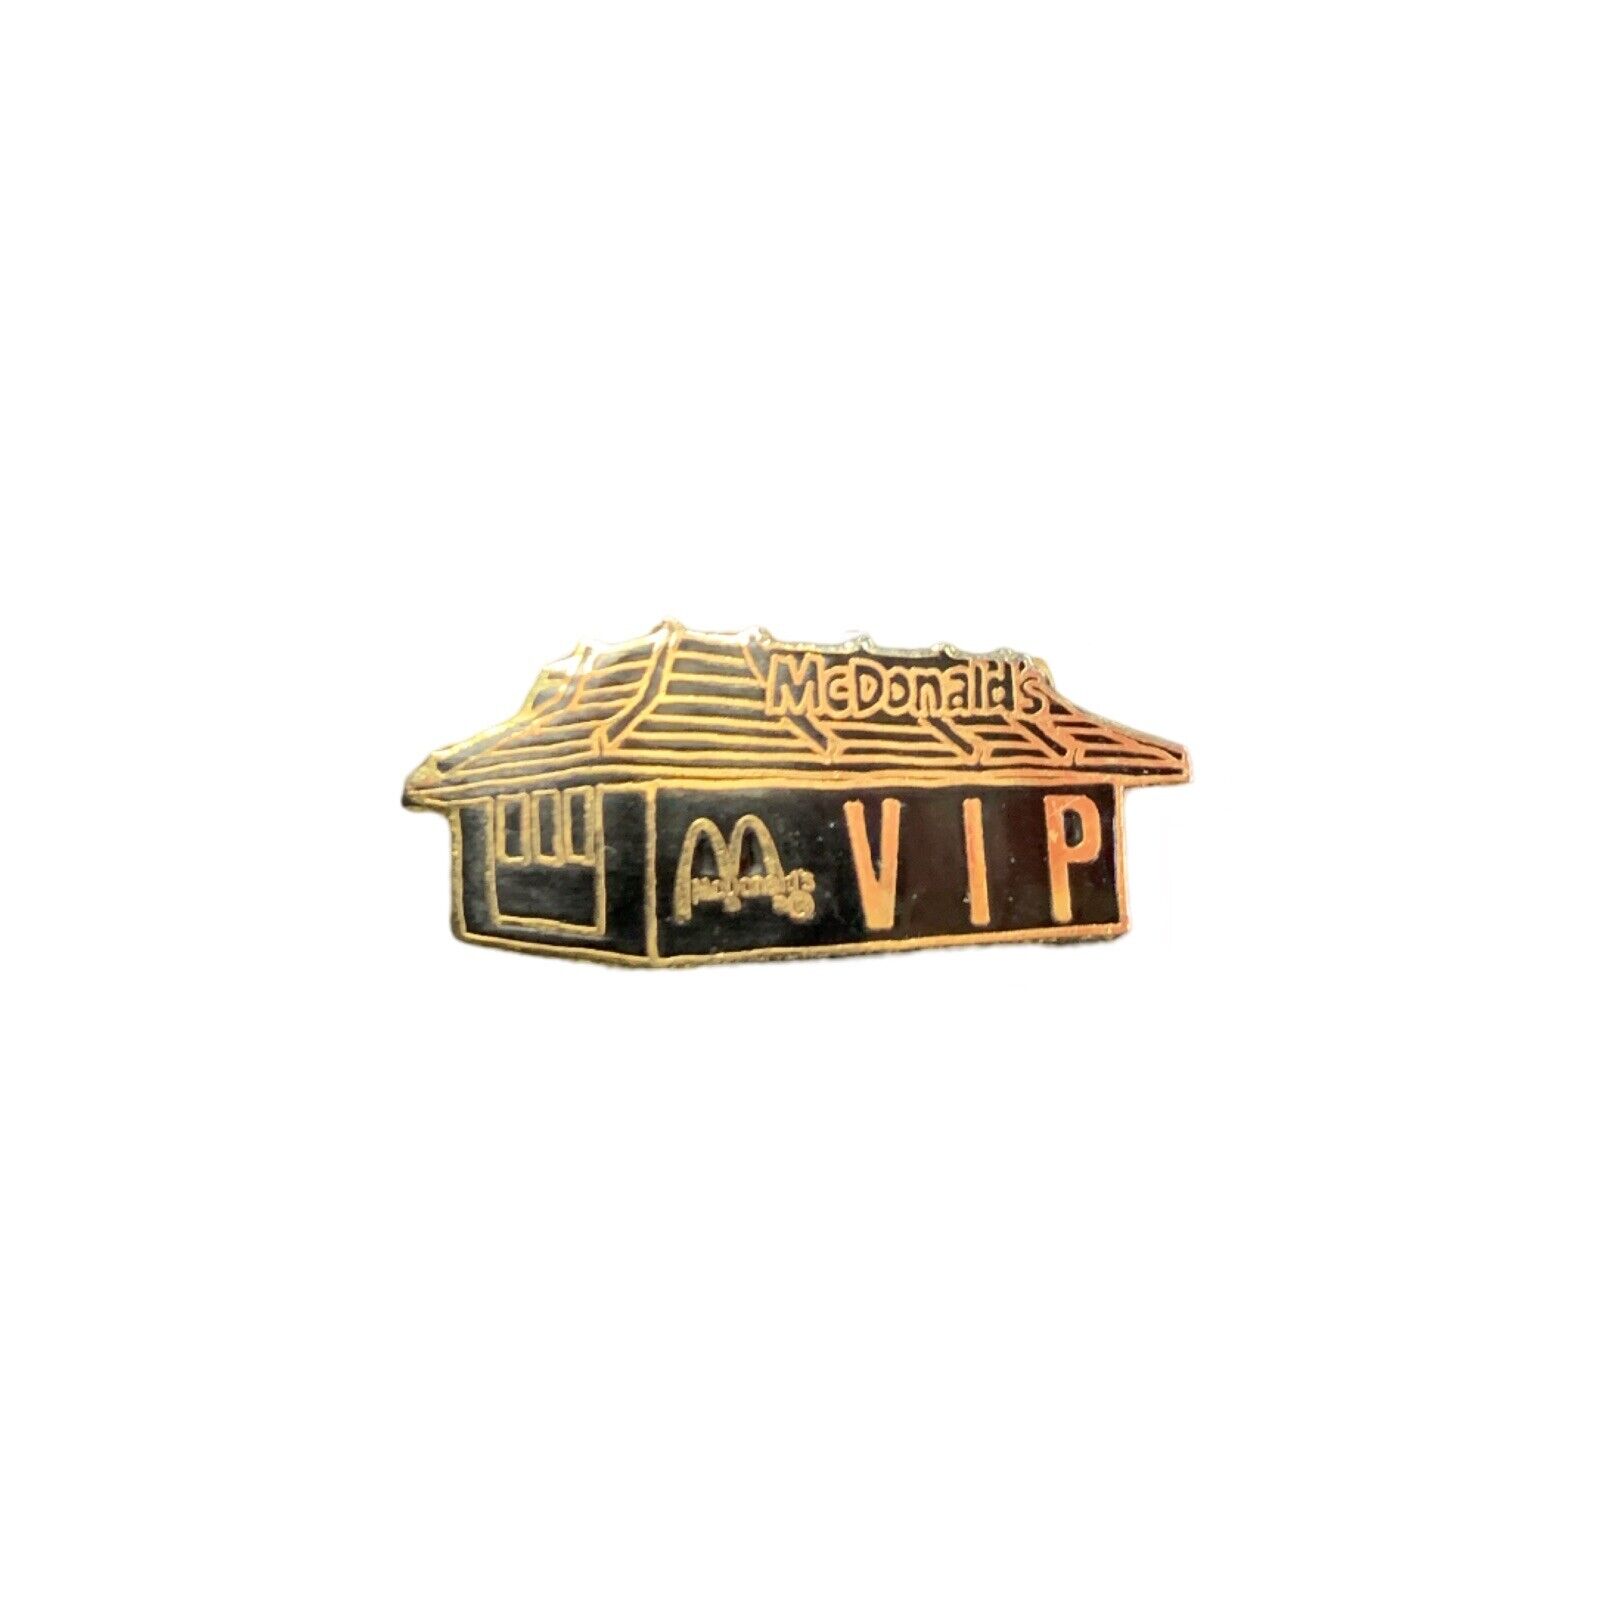 Vintage 1980’s McDonald’s VIP Pin